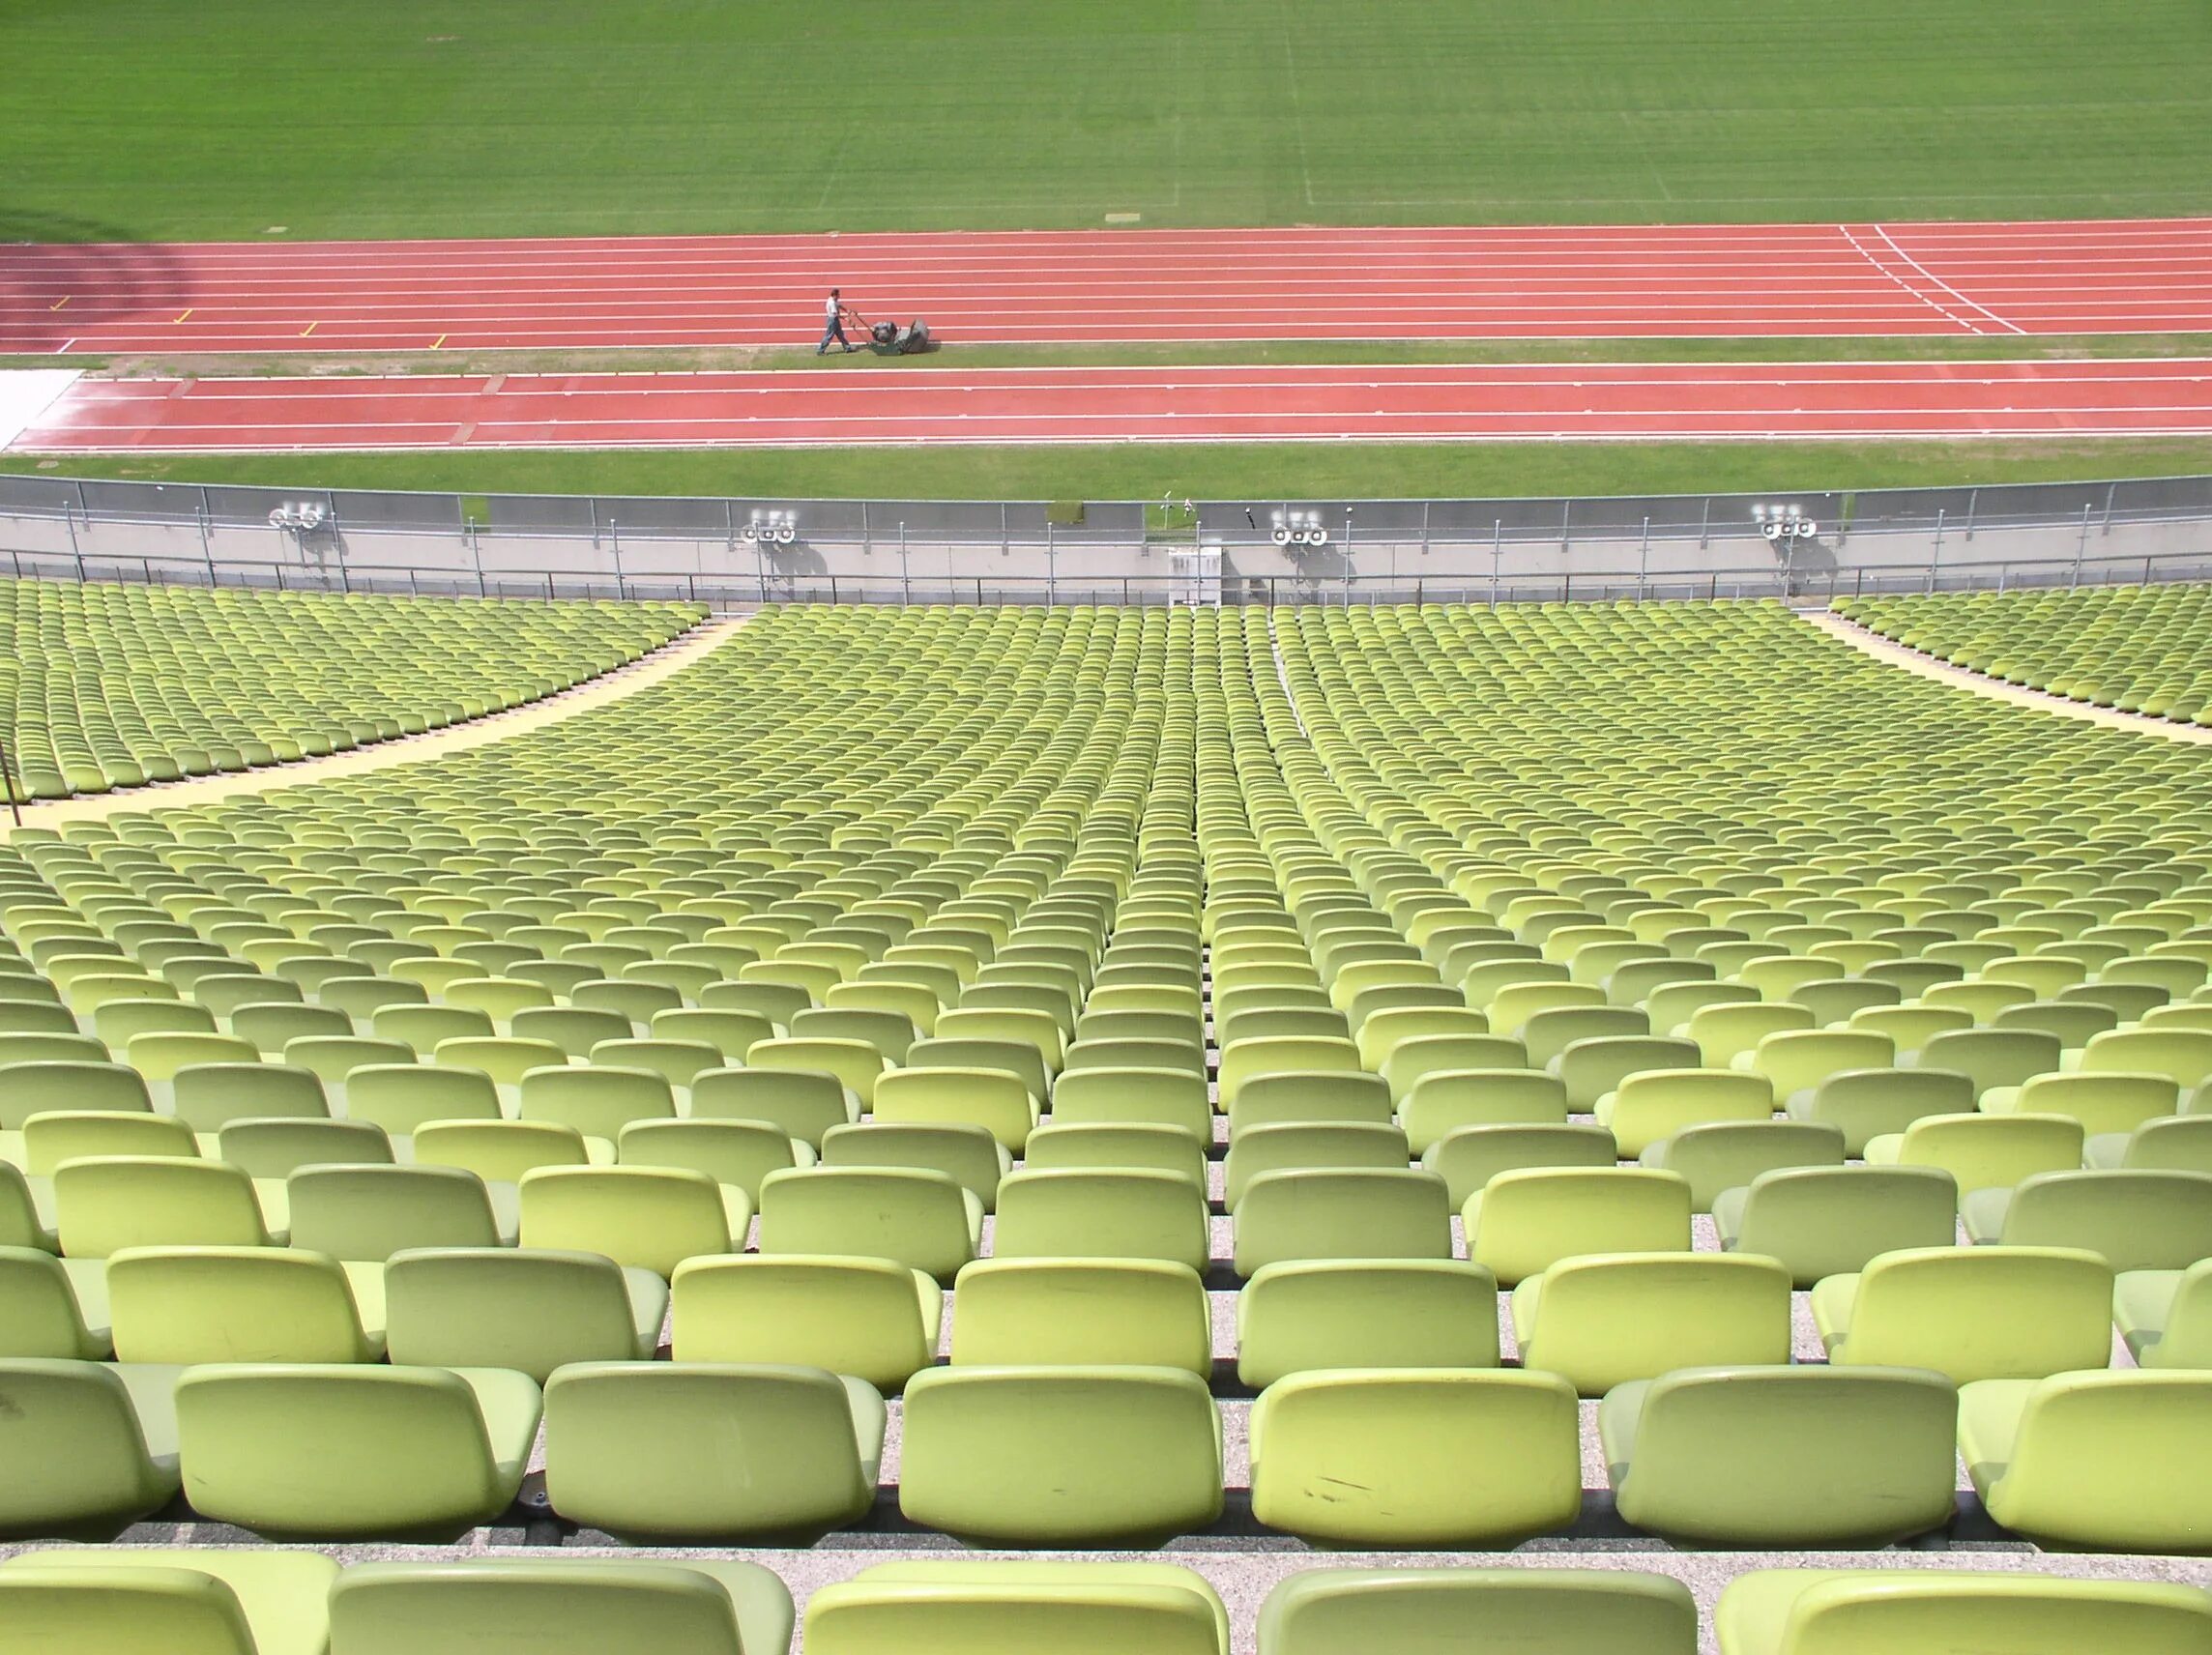 Ряд на стадионе. Зеленый стадион. Сиденья на стадионе. Стадион ряды. Кресло стадионное.